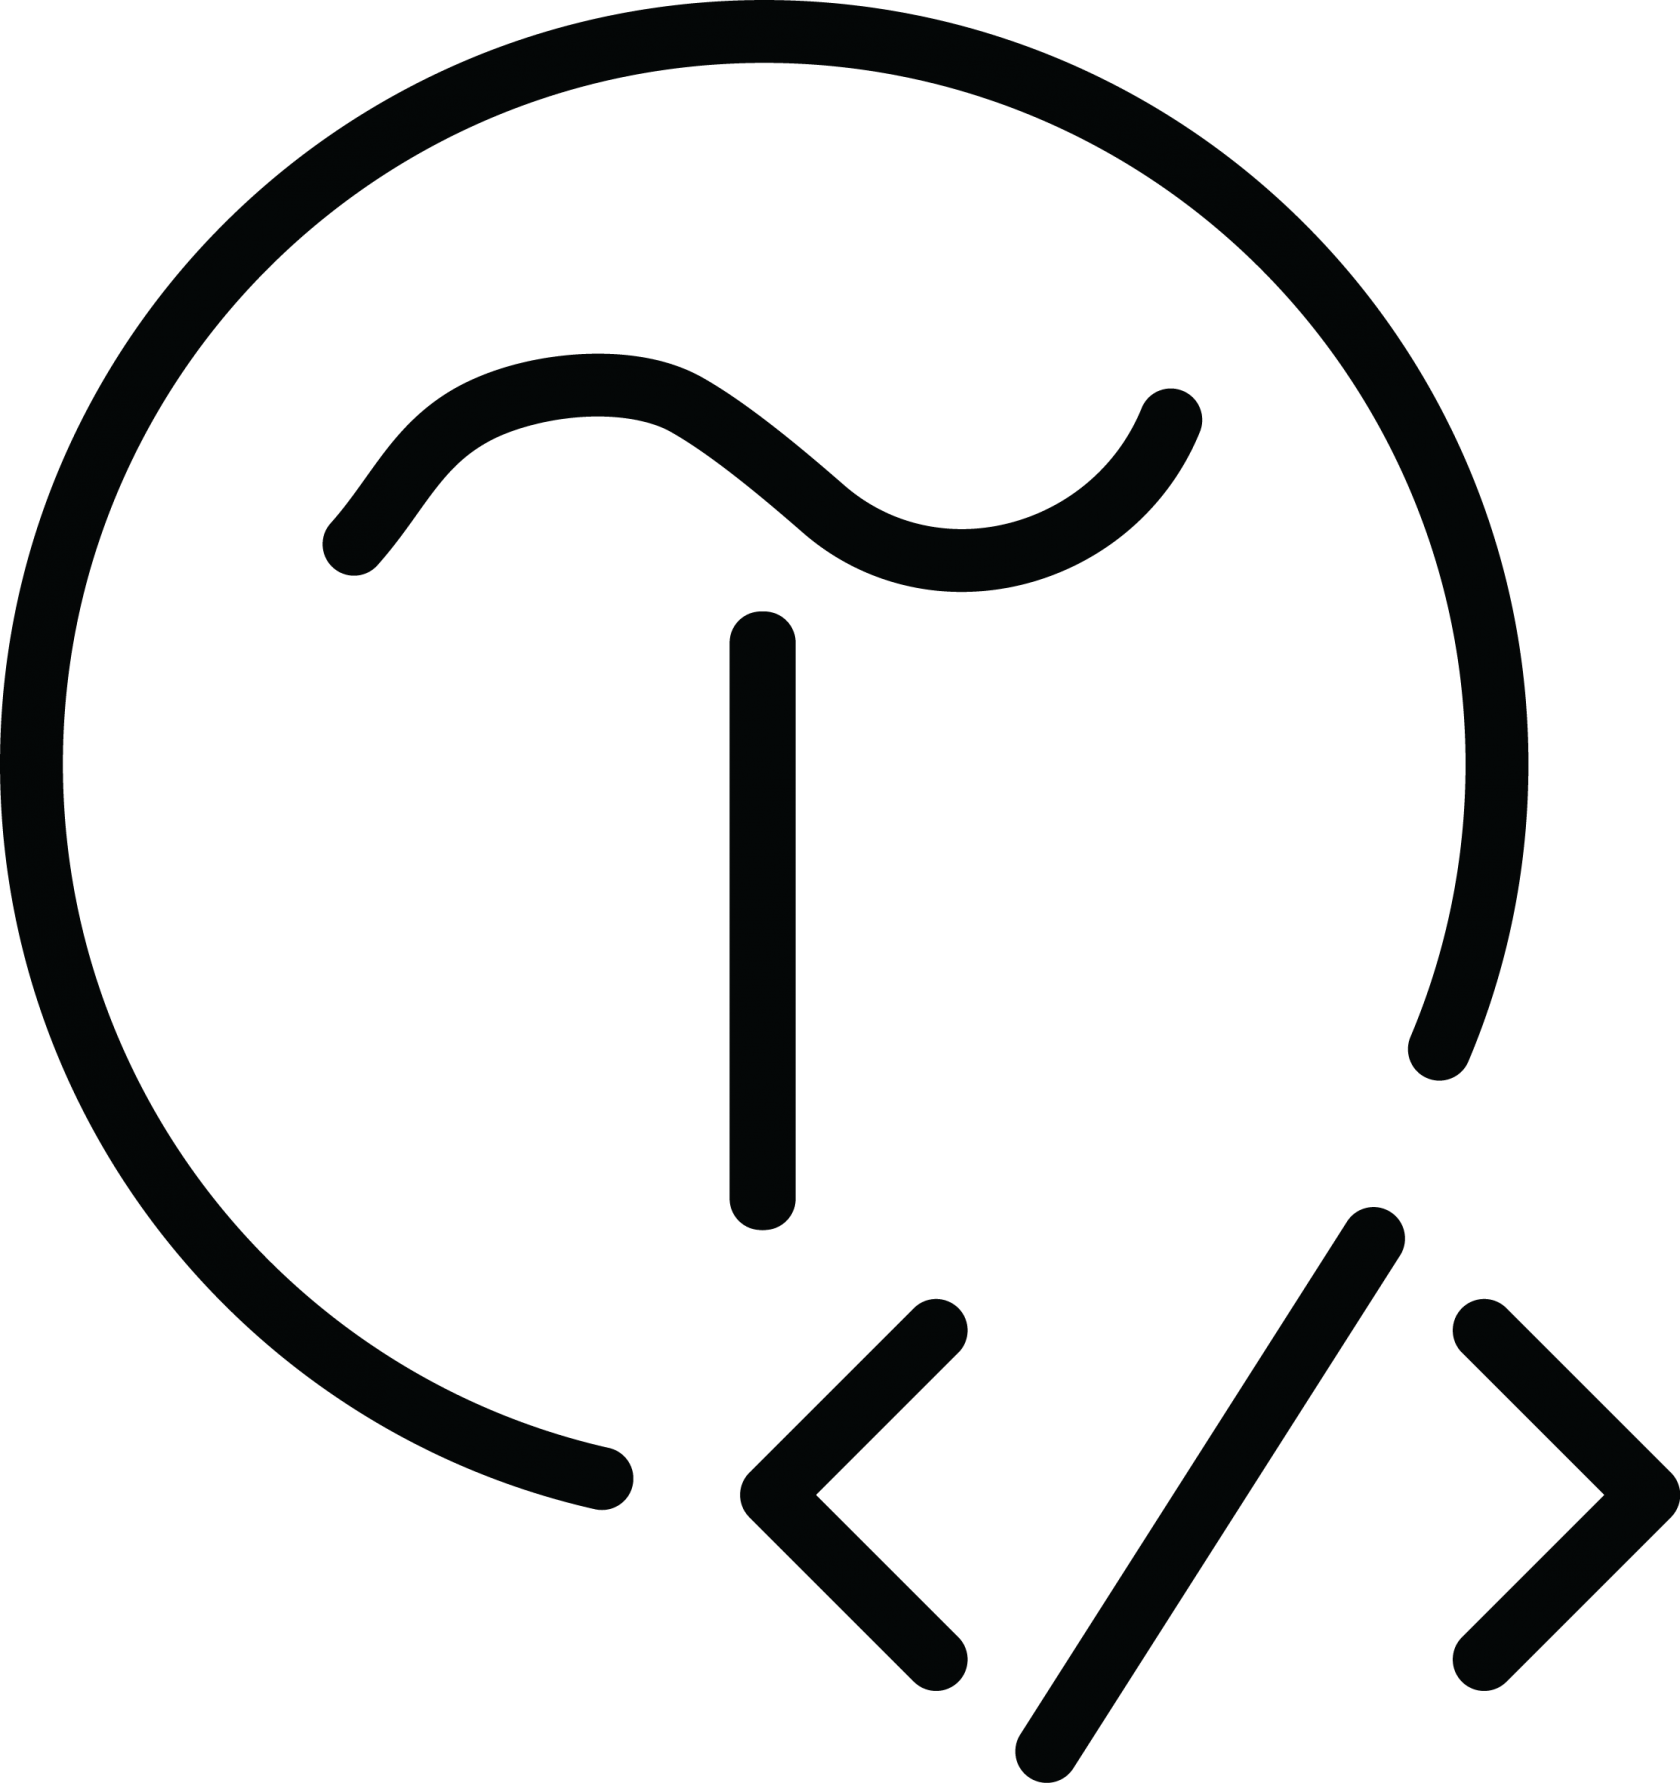 Tilda download. Tilda значок. Иконки Тильда. Тильда символ. Tilda Publishing логотип.